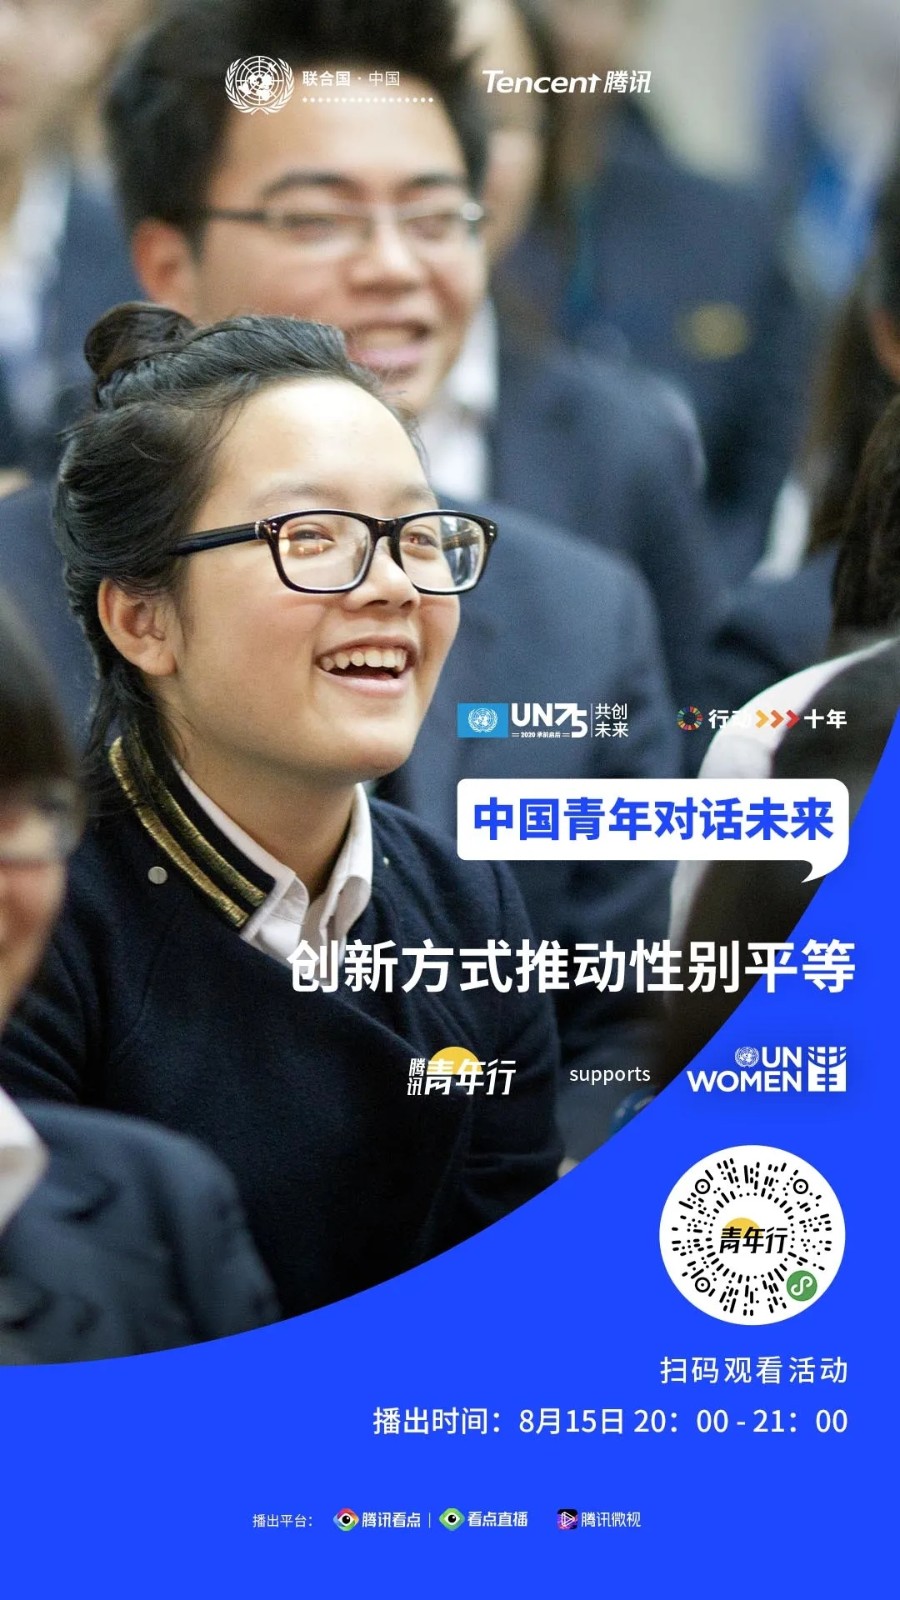 UN75#中国青年对话未来：创新方式推动性别平等